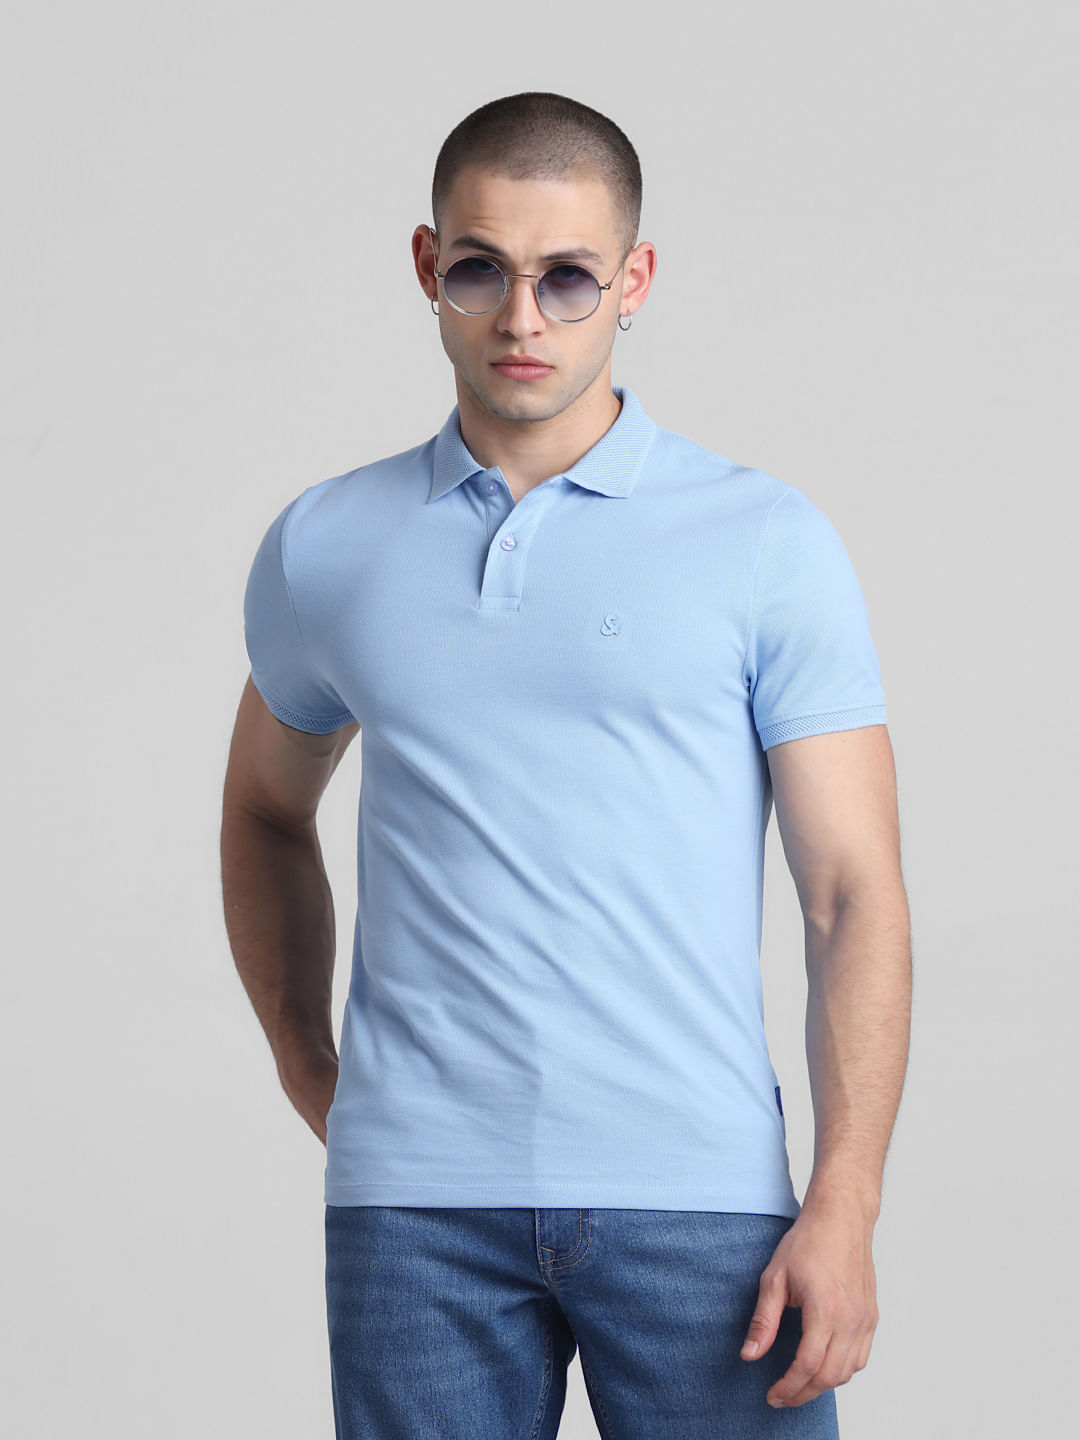 Blue Shirt Matching Pants | Blue shirt outfits, Summer outfits men, Blue  outfit men